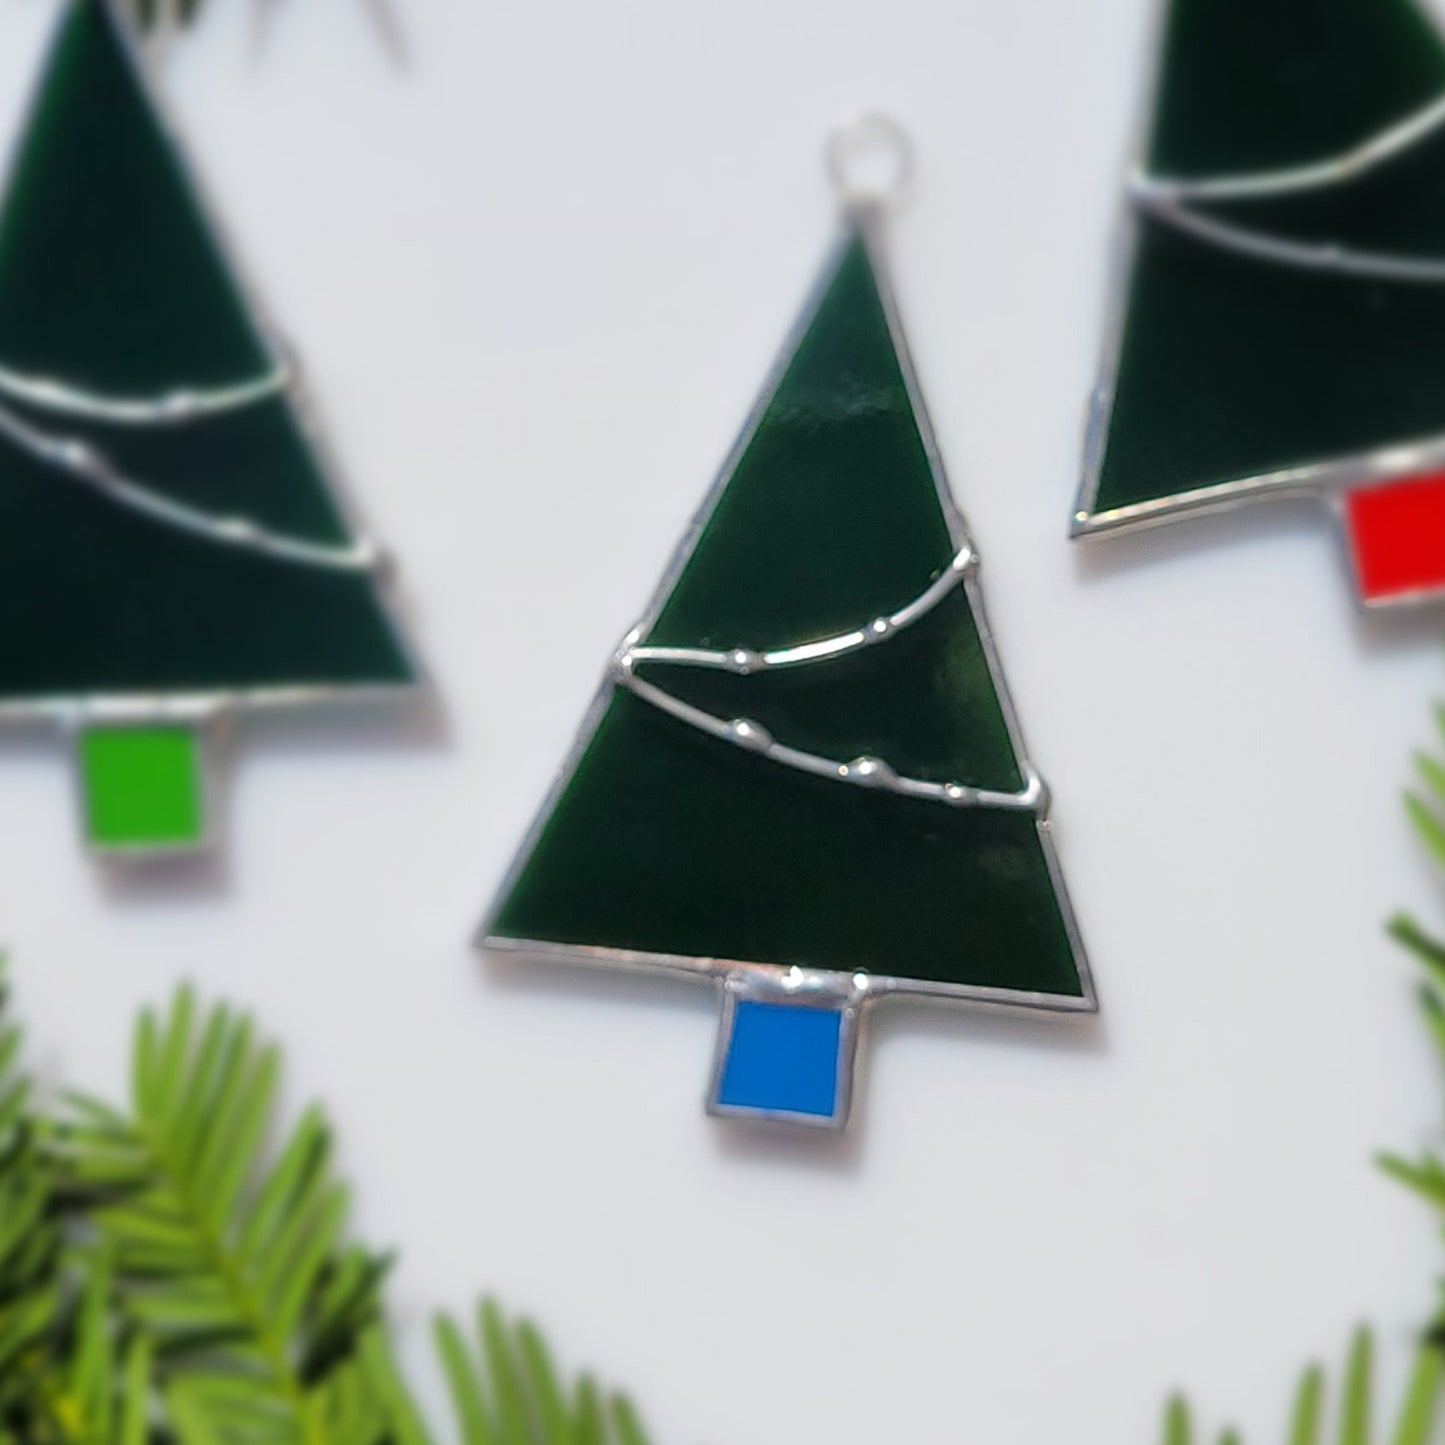 Christmas Ornaments - Traditional edition - 3 Hr workshop, make 3 Ornaments - Angel, Tree & Star